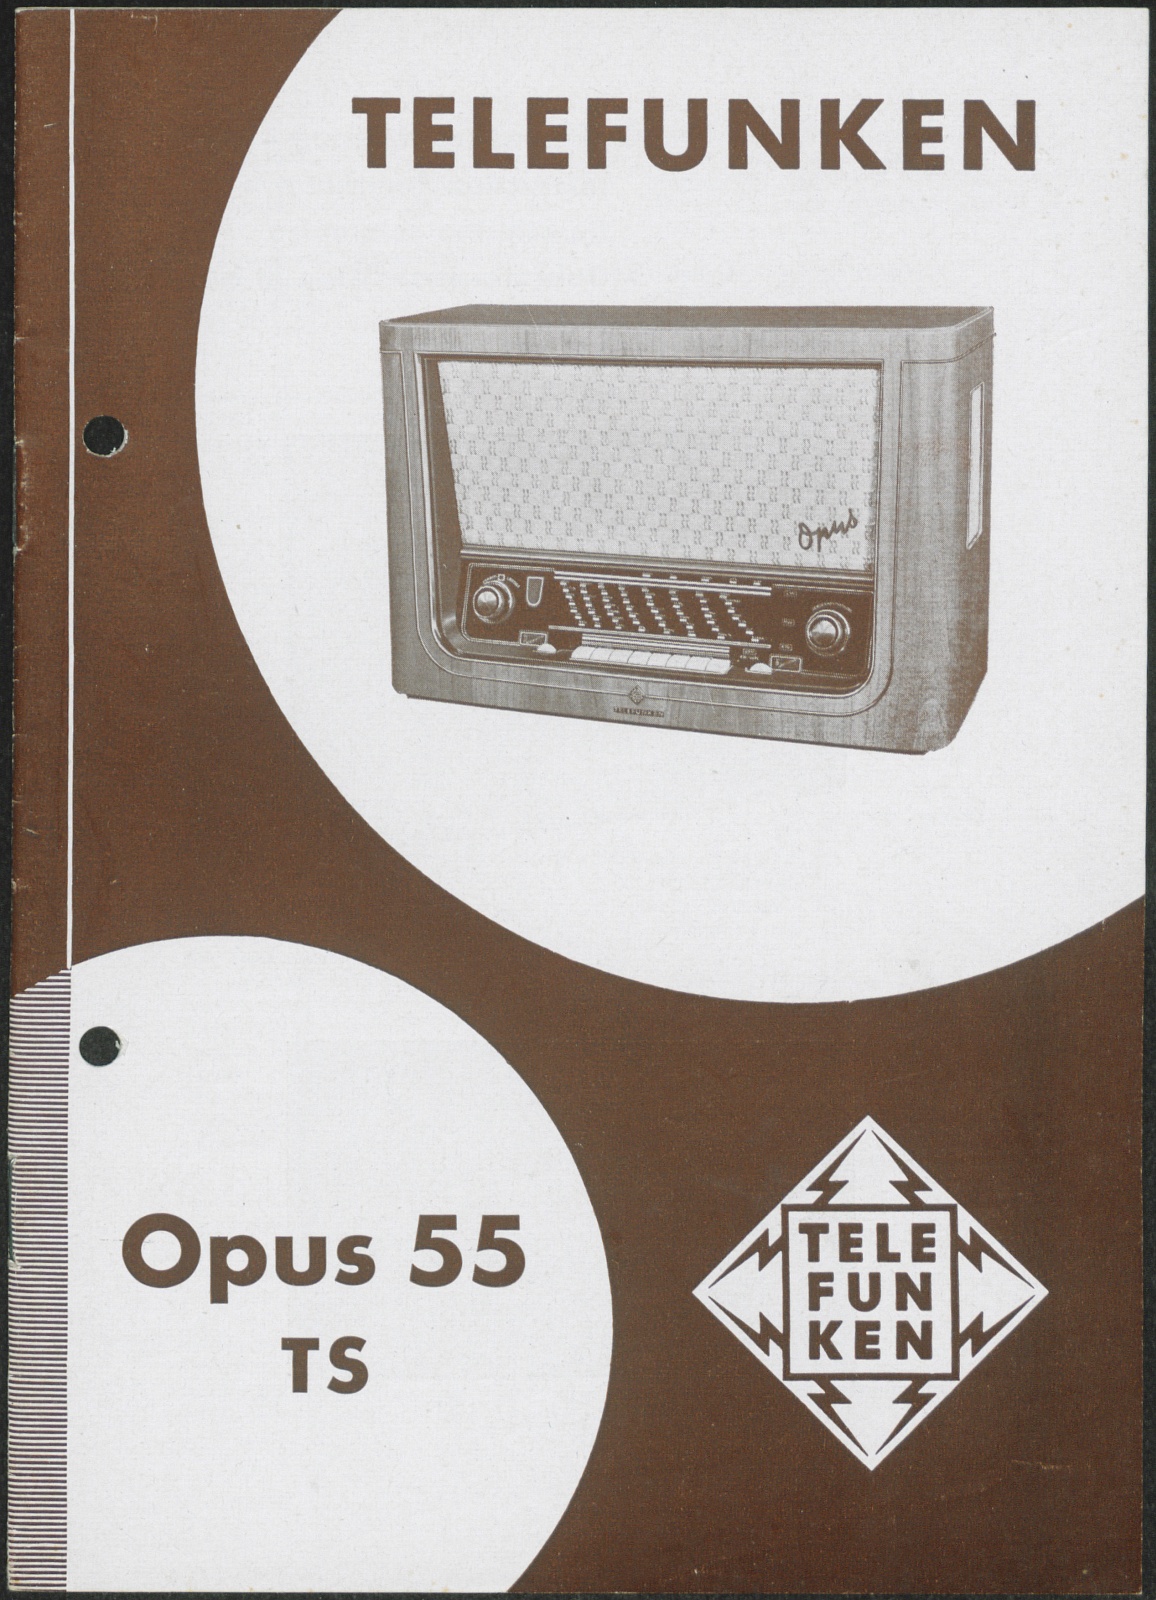 Bedienungsanleitung: Telefunken Opus 55 TS (Stiftung Deutsches Technikmuseum Berlin CC0)